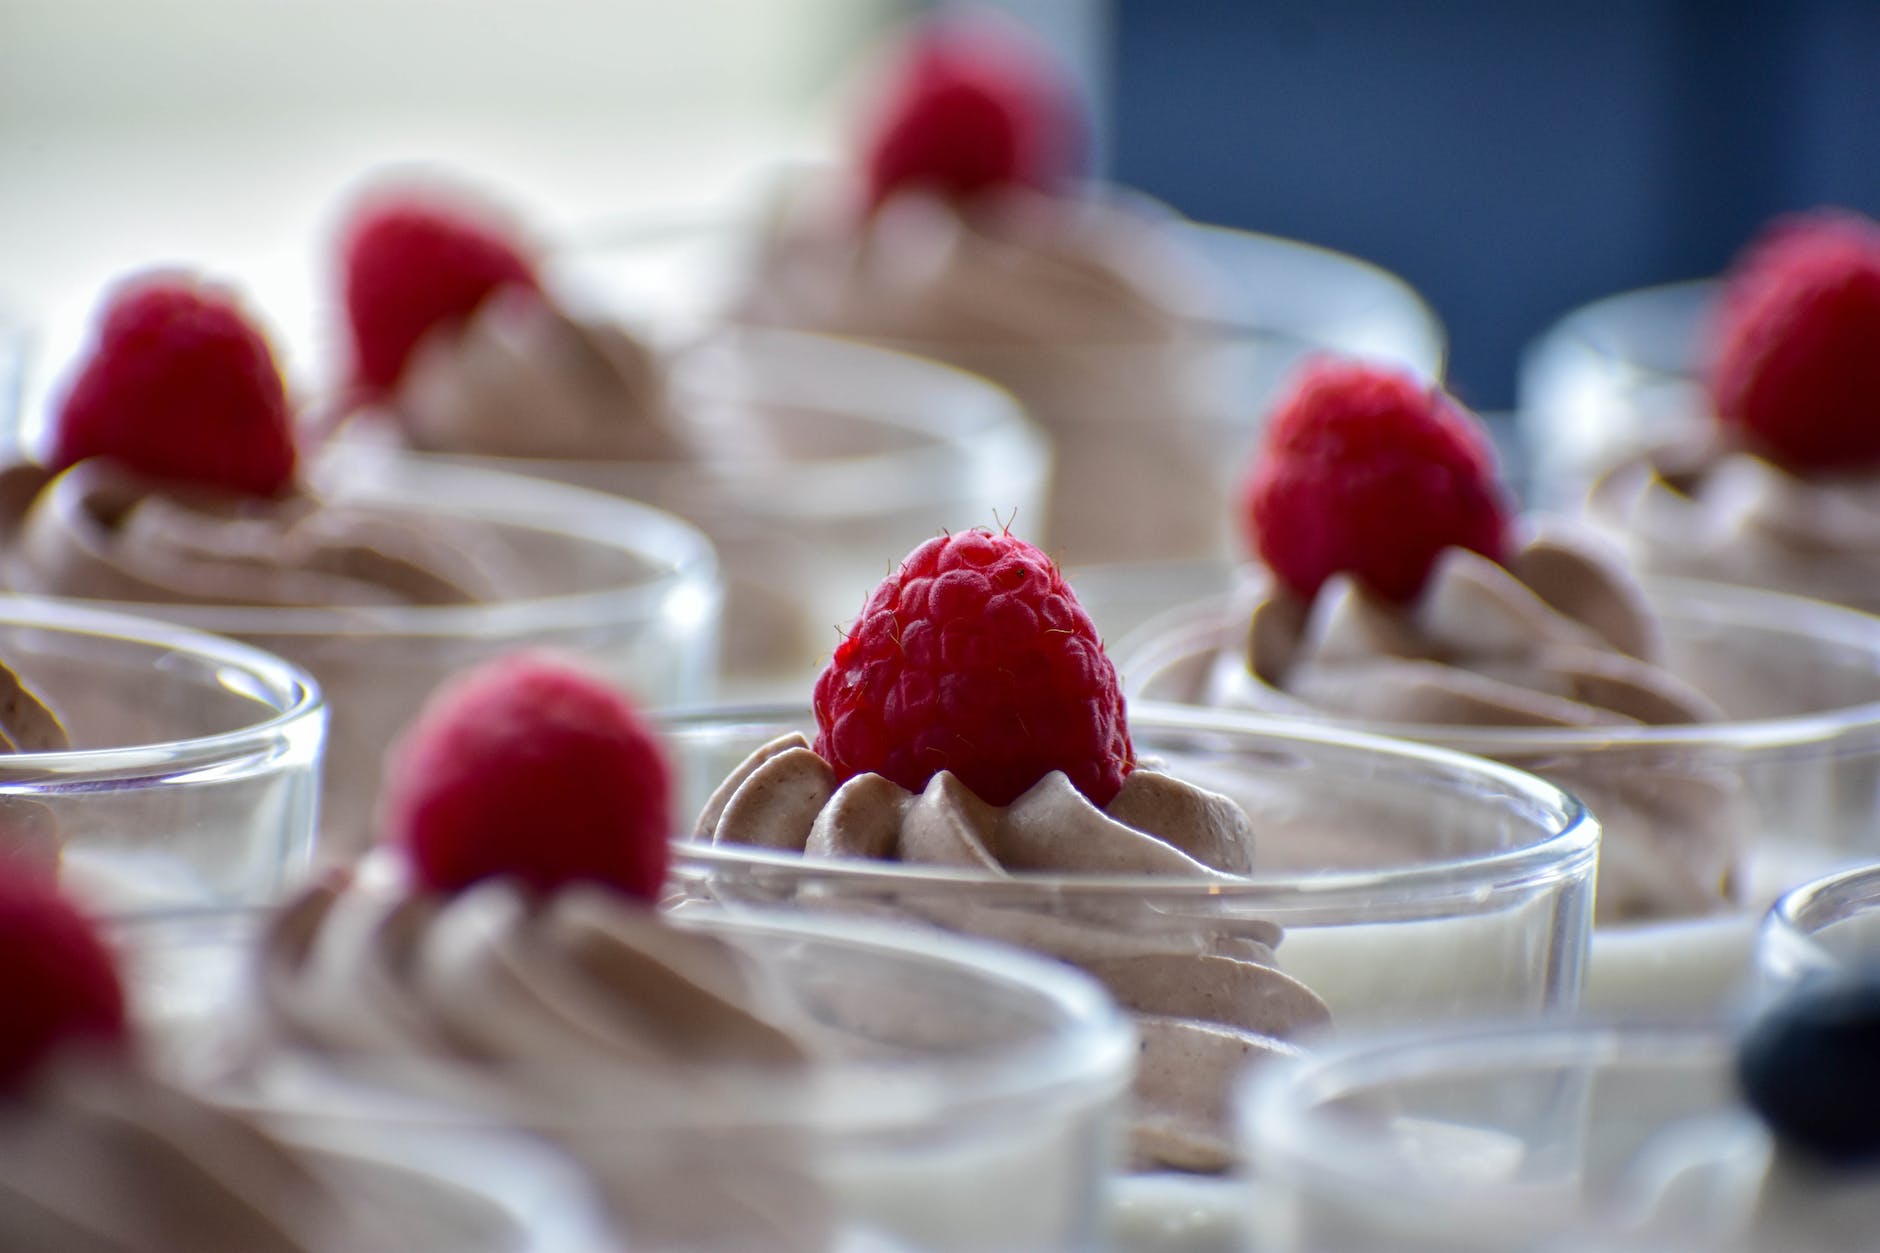 frozen berry yogurt
29 Healthy Snacks Ideas High in Protein: Ultimate Guide + PDF